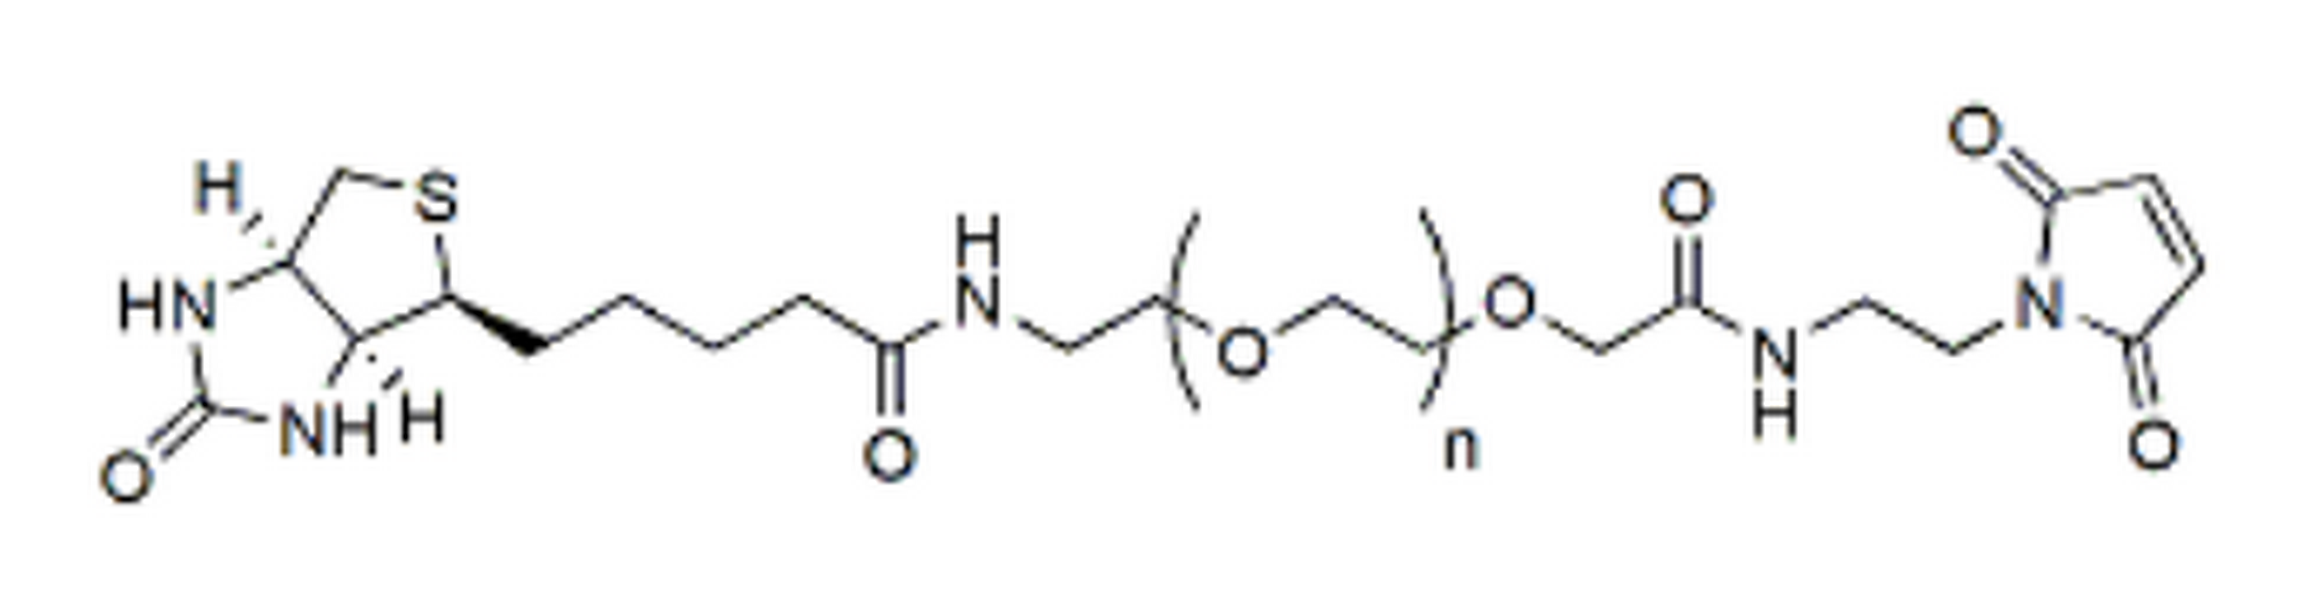 Biotin-PEG-Mal, MW 3.4K